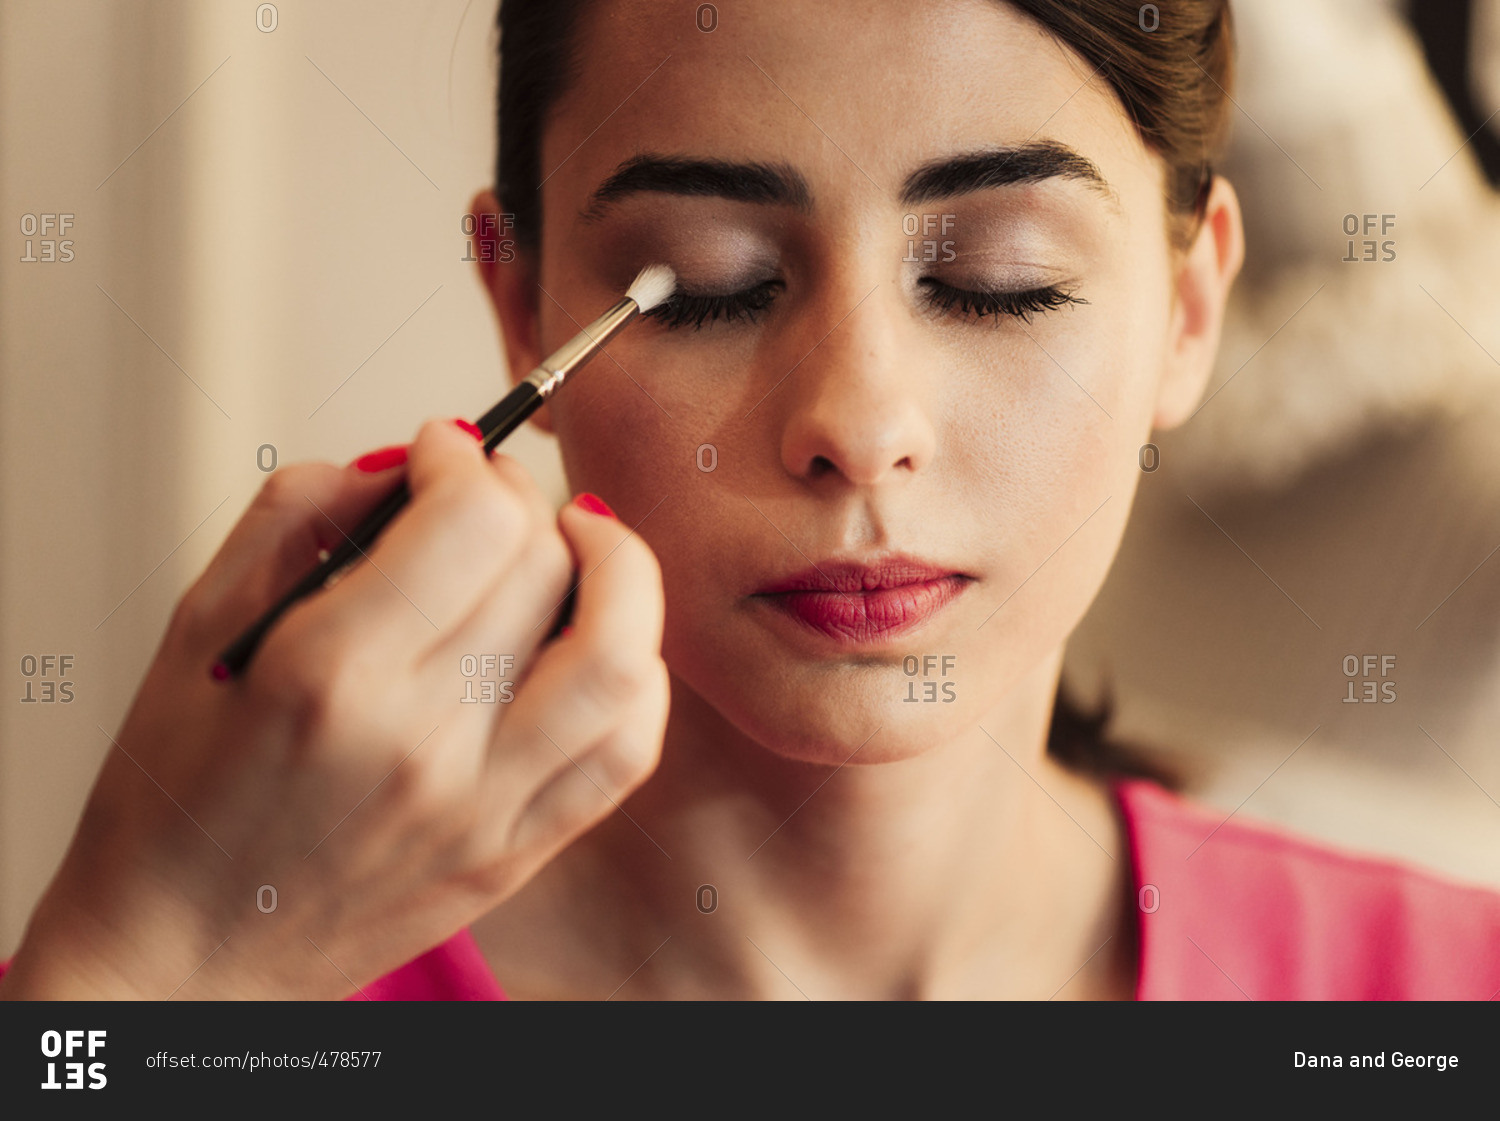 Woman having eye makeup put on